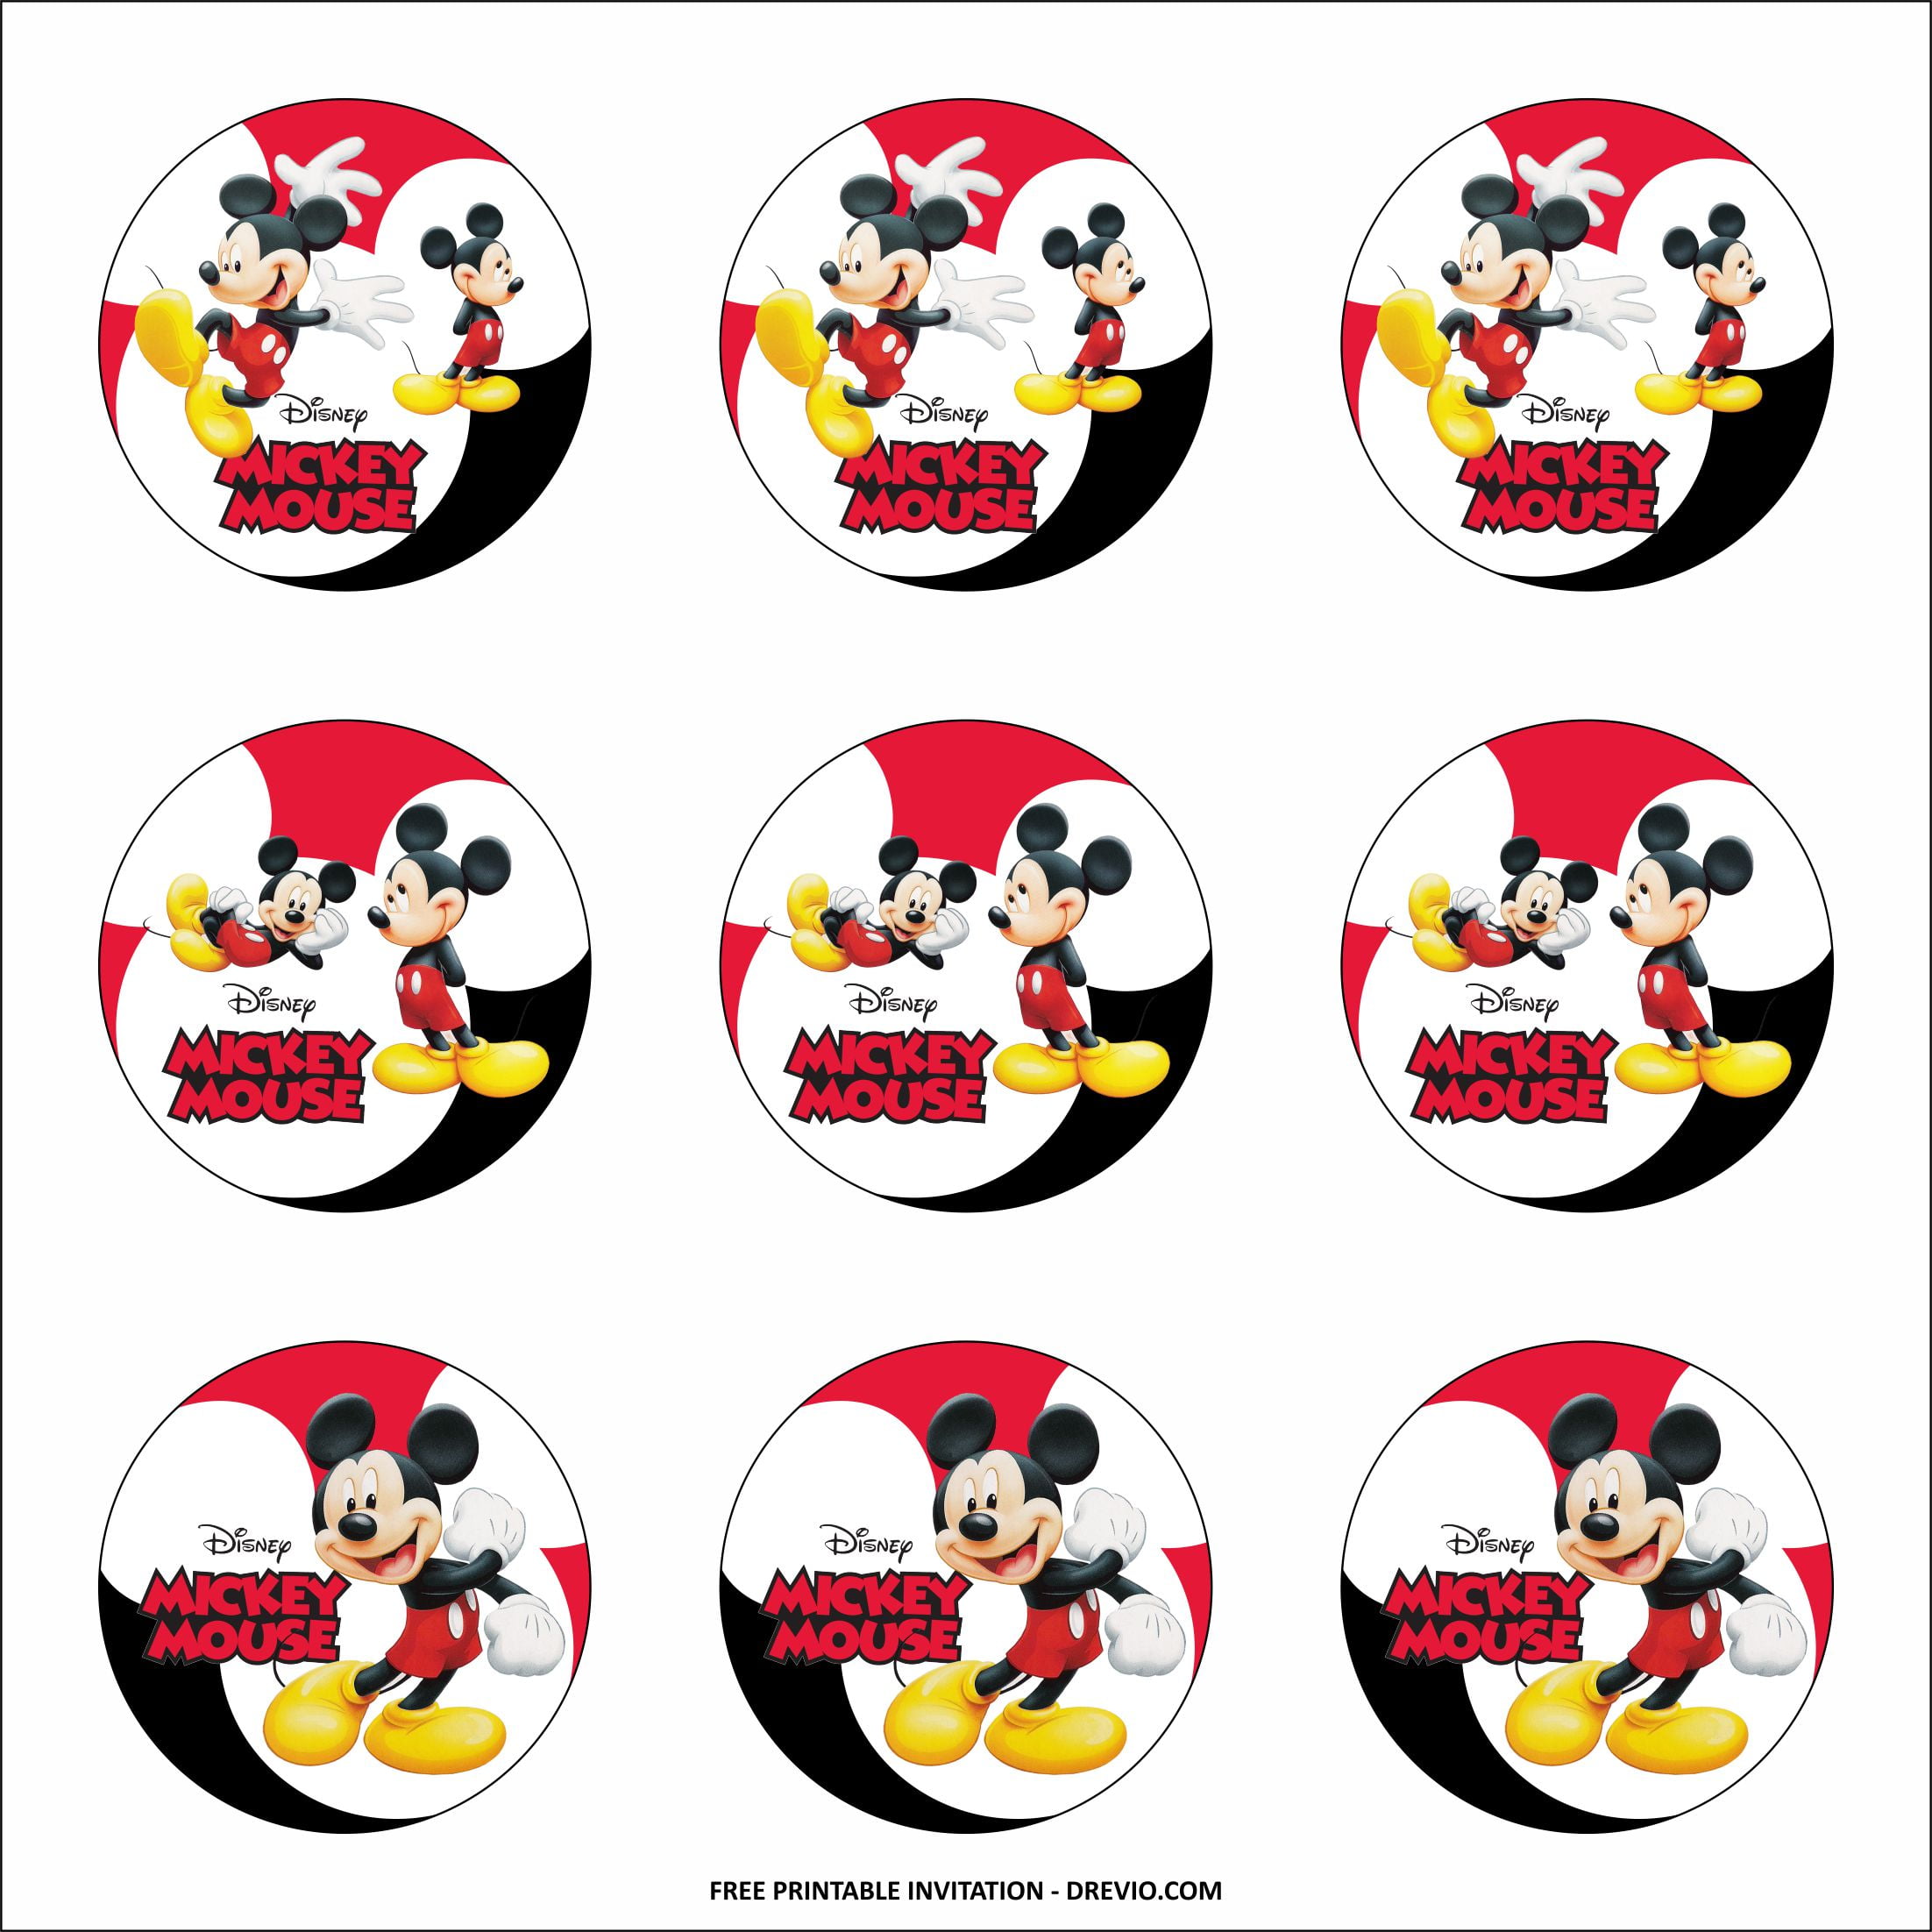 (FREE PRINTABLE) Mickey Mouse Birthday Party Kits Template DREVIO